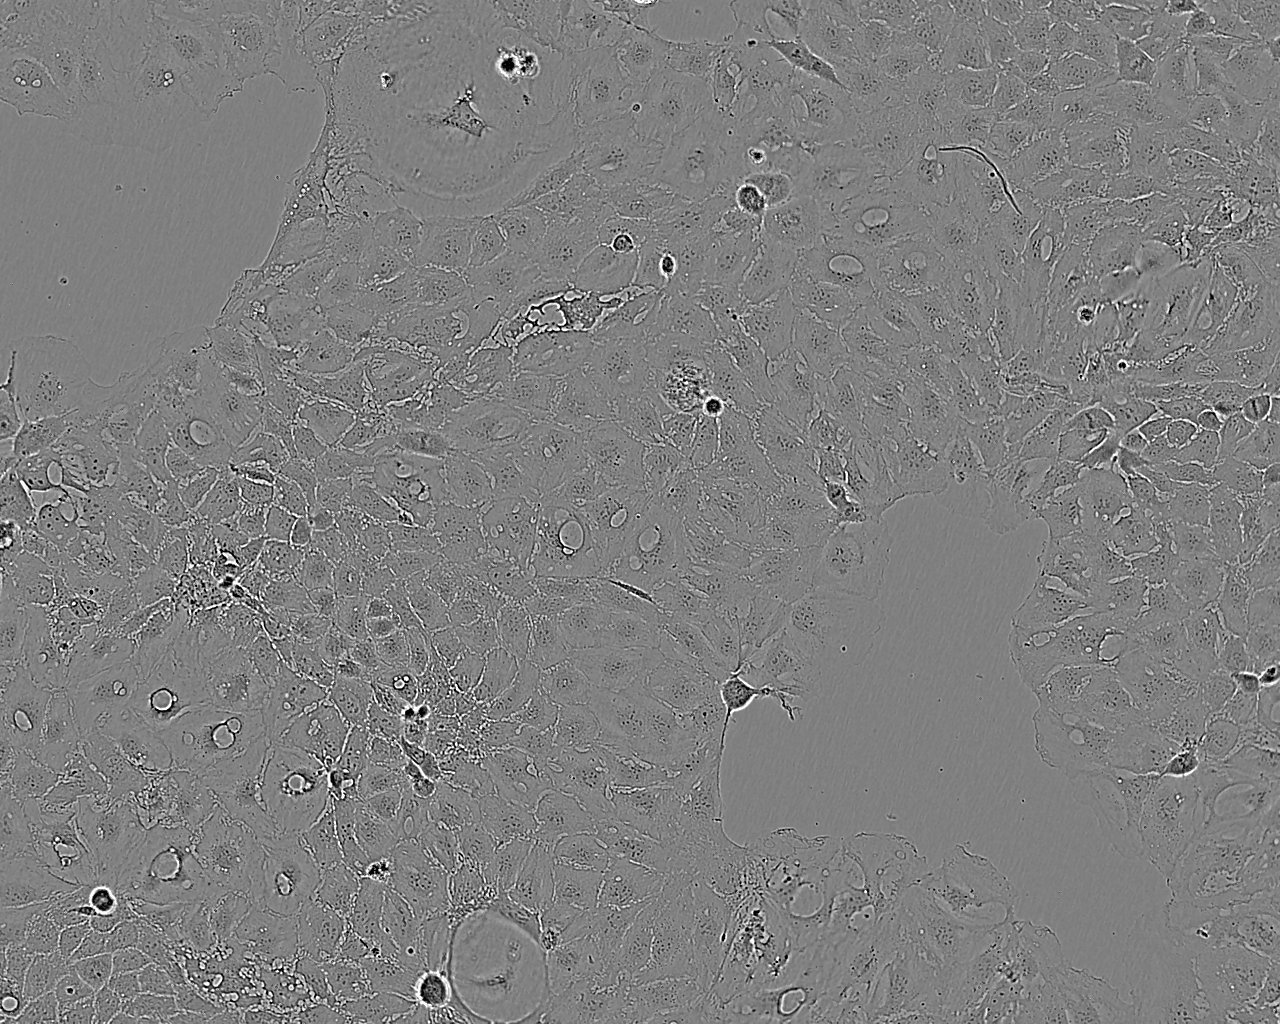 KMS-18 Epithelial Cell|人浆细胞骨髓瘤传代细胞(有STR鉴定)